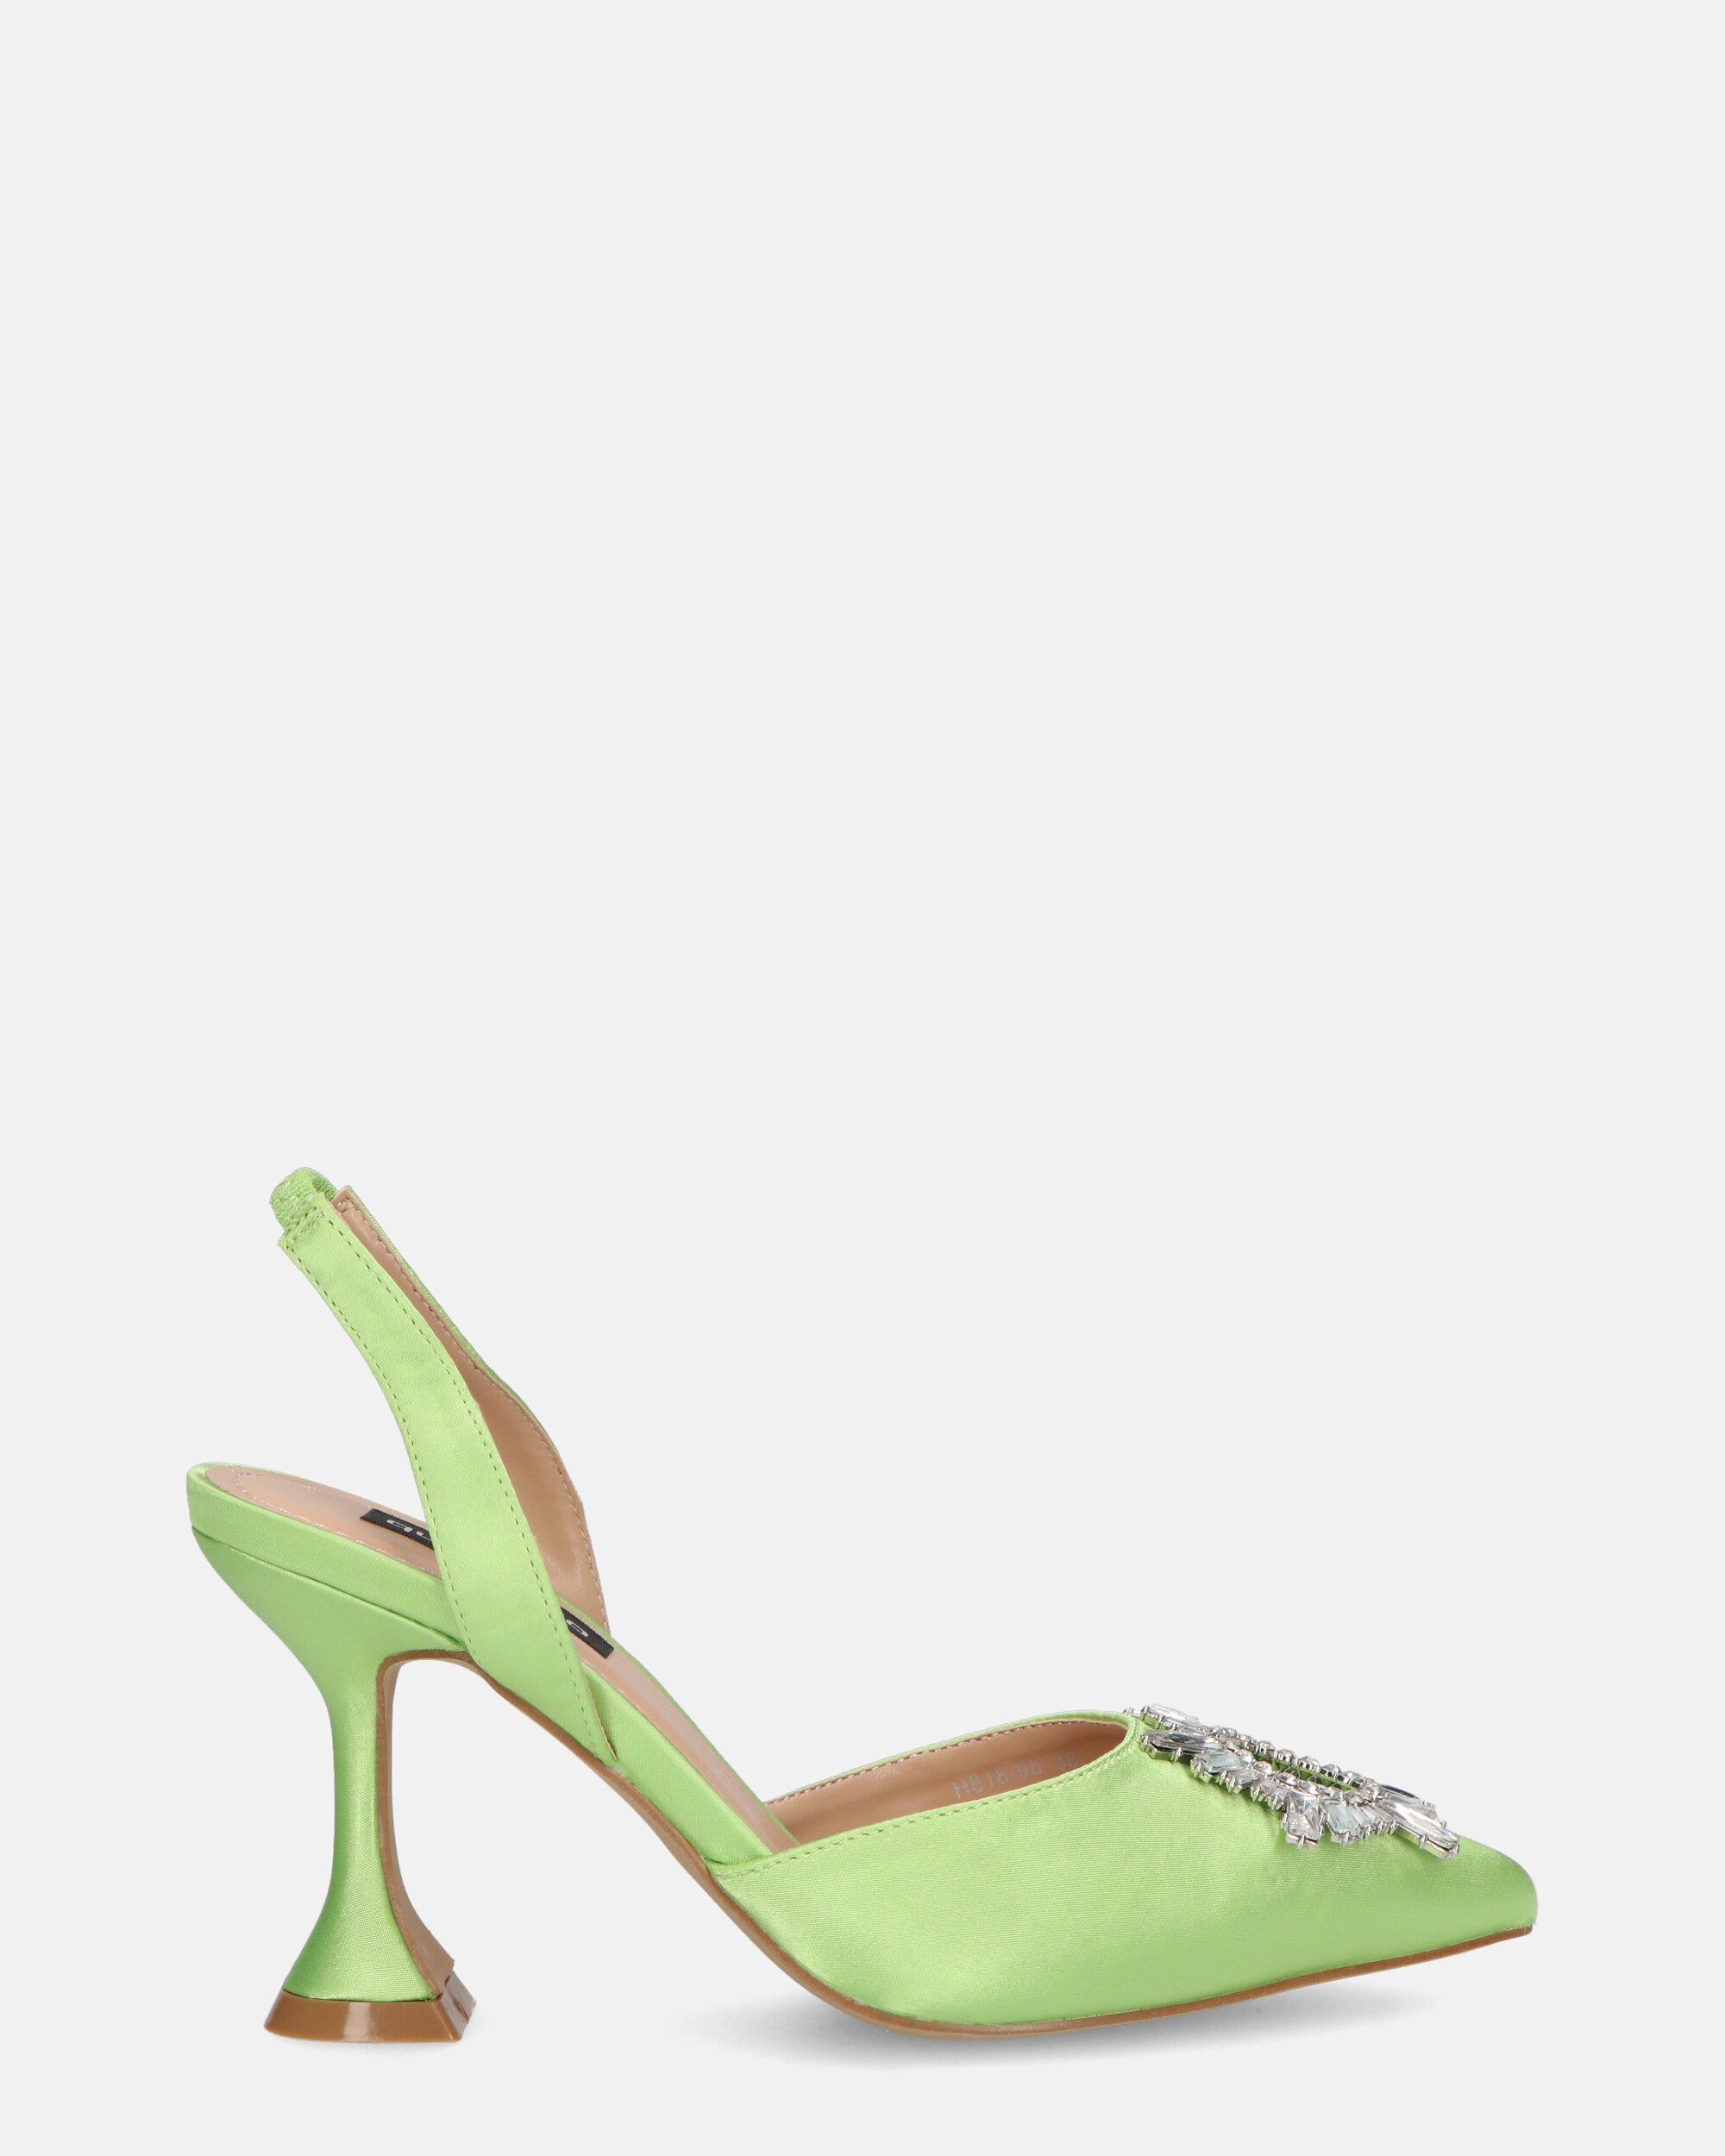 MAGDA - scarpa con tacco in satin verde mela con gemme decorative